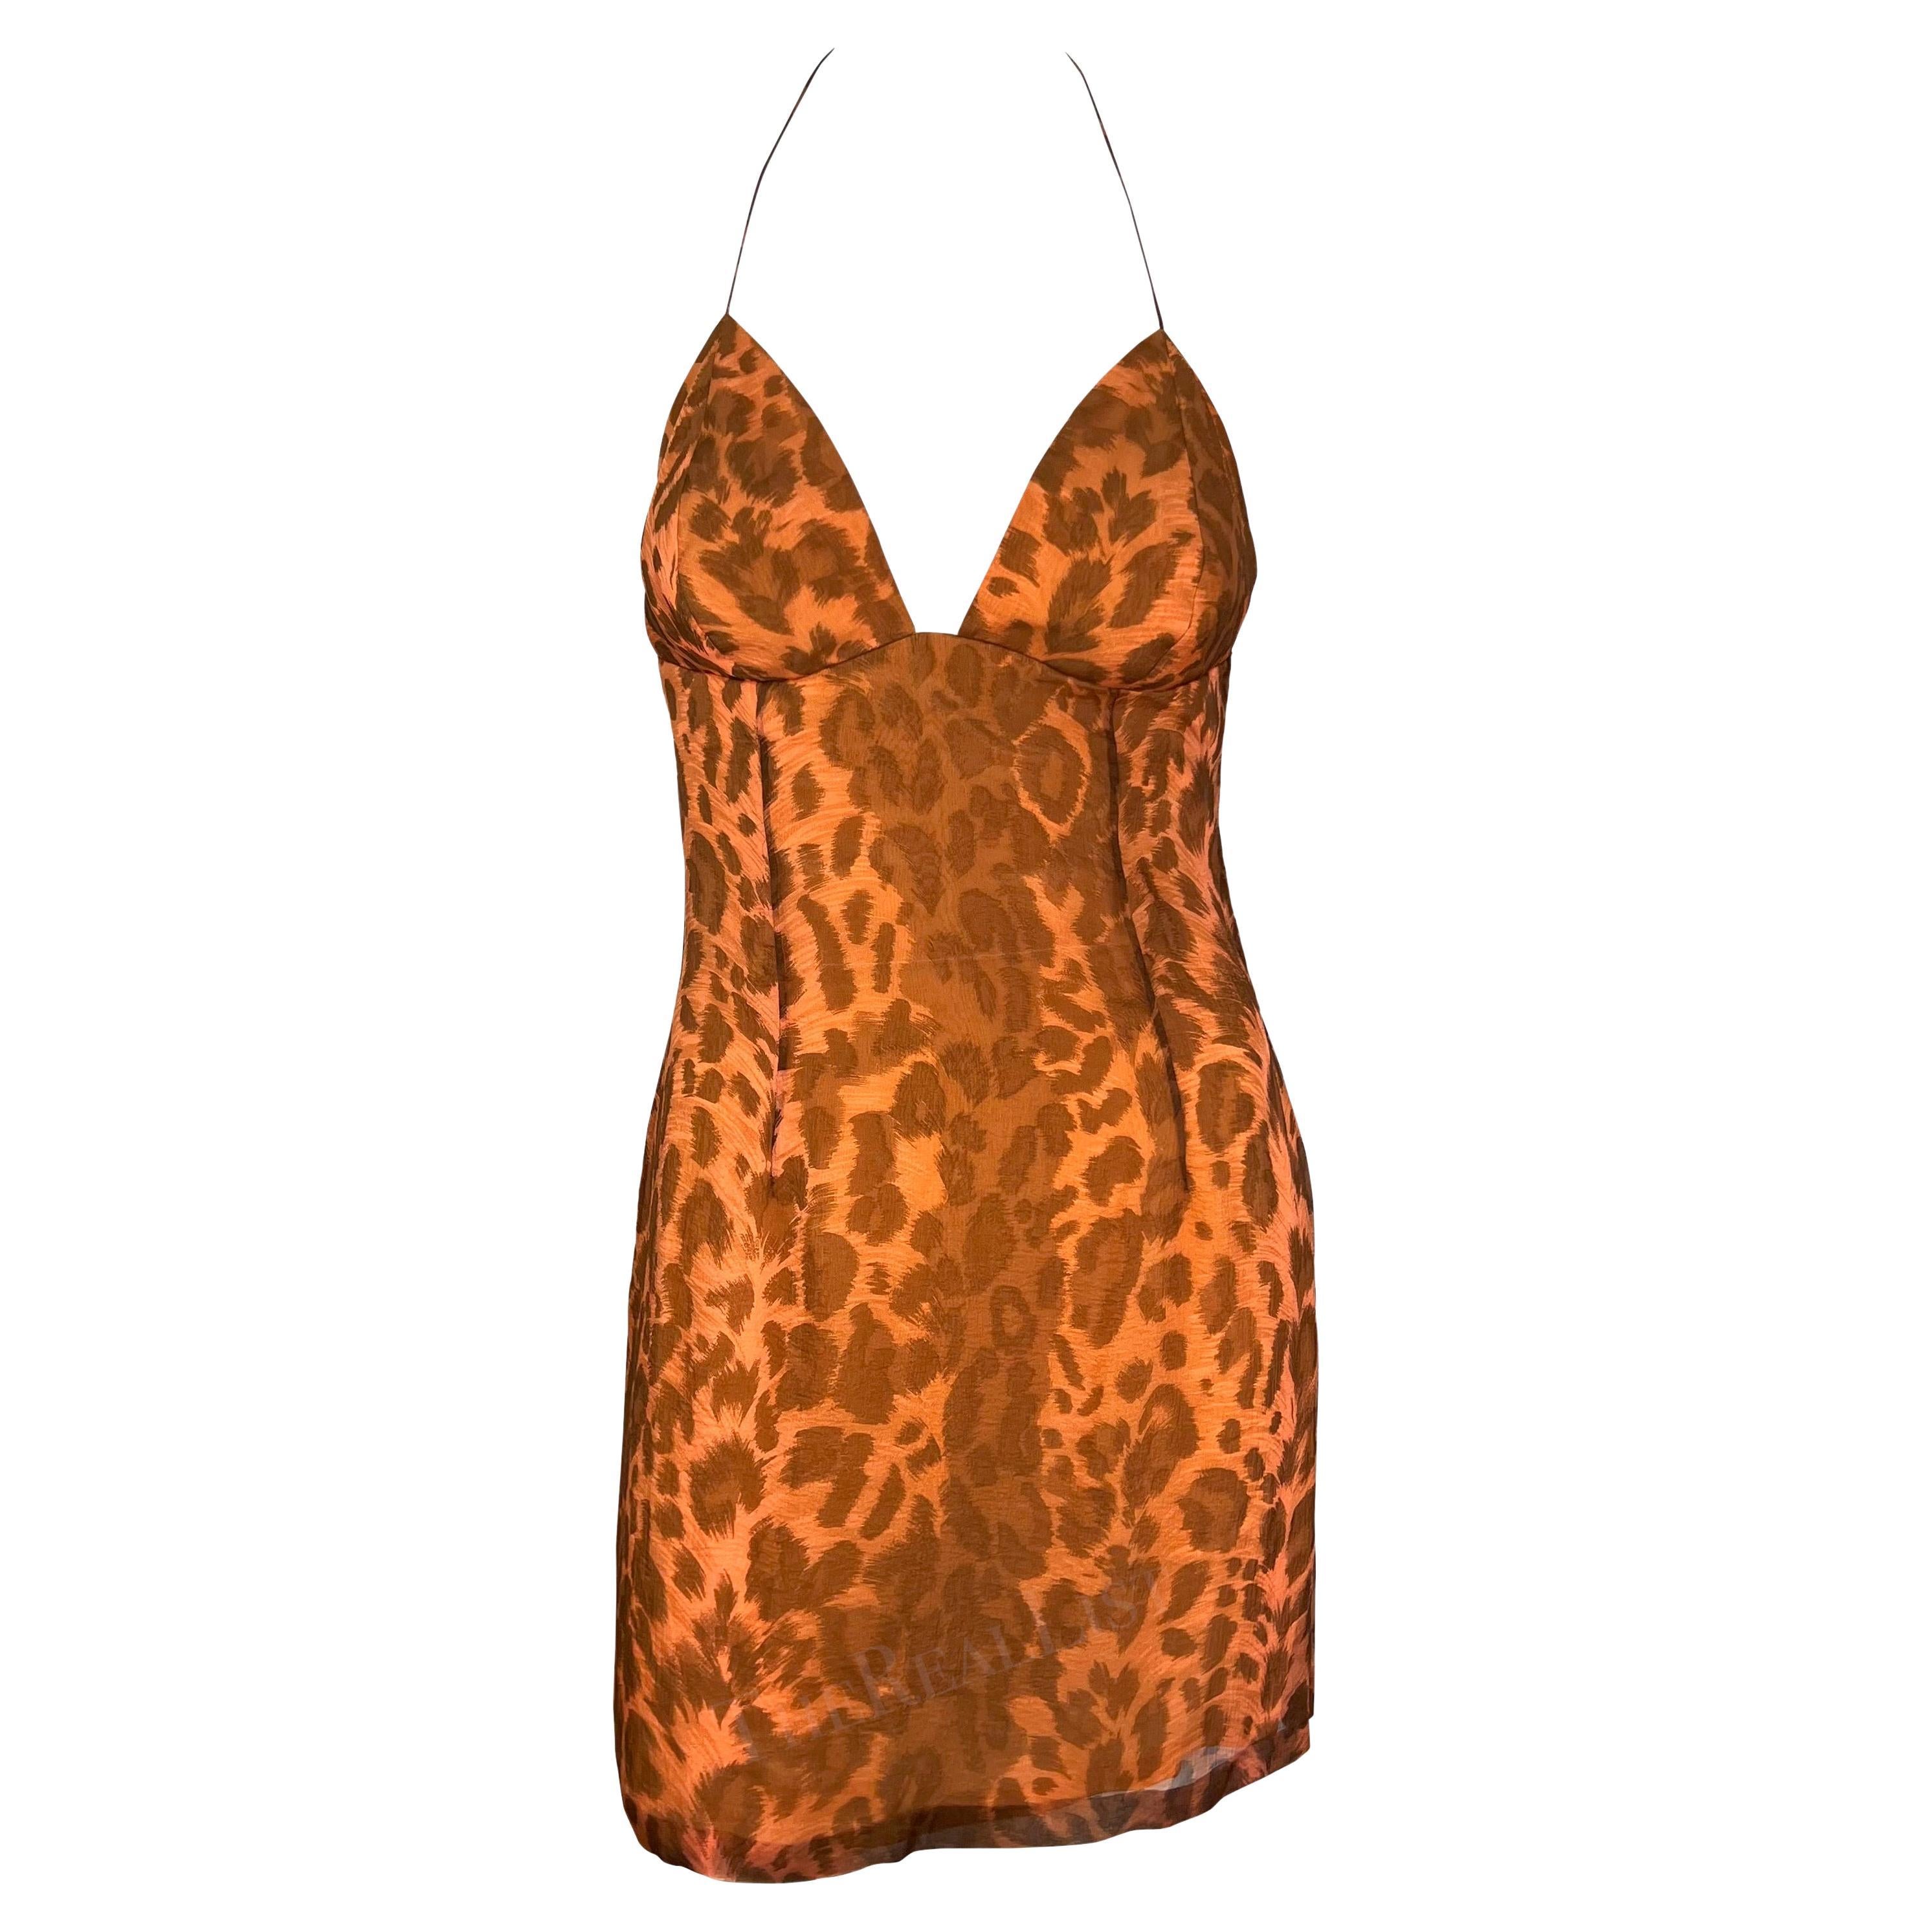 S/S 1997 Jacques Fath Runway Orange Cheetah Print Halterneck Mini Dress